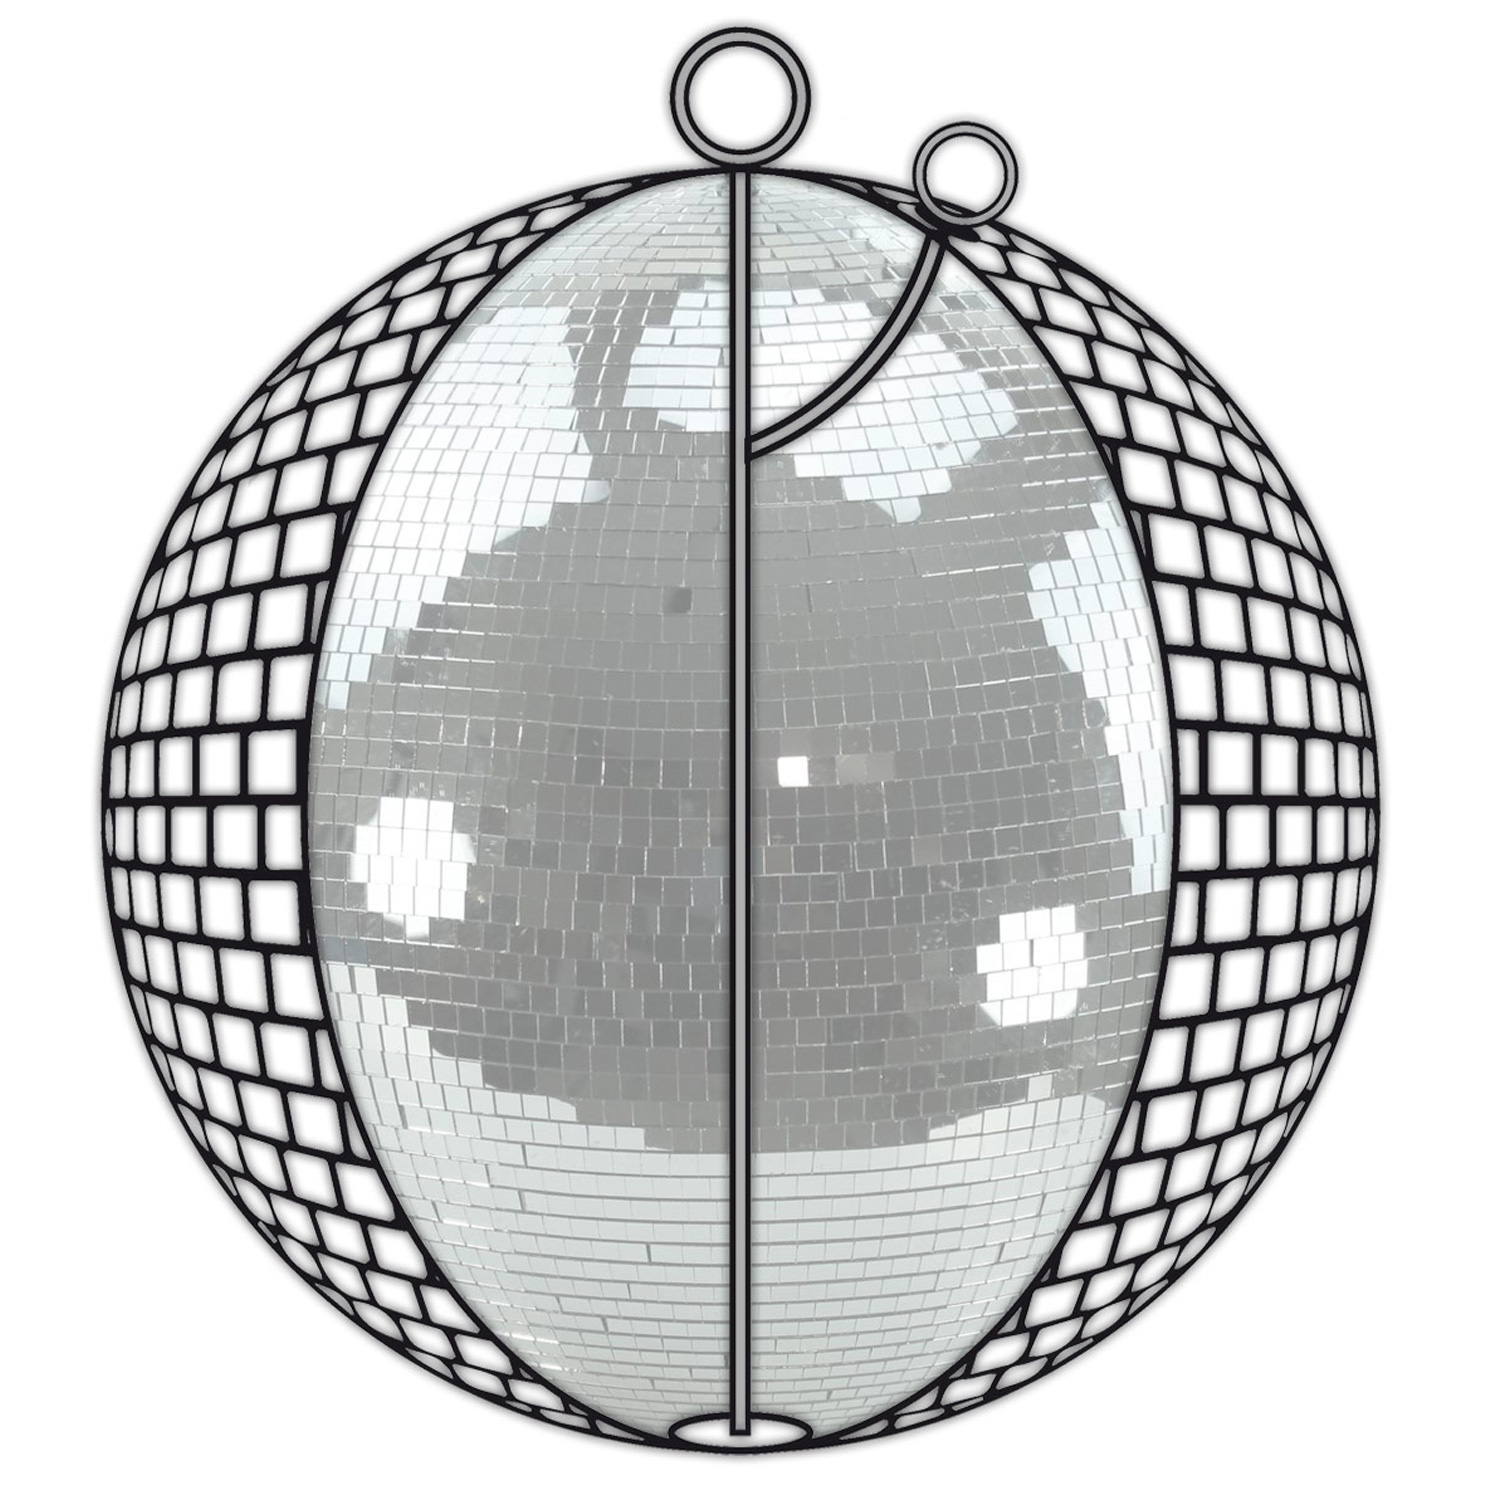 Spiegelkugel 150cm silber chrom- Diskokugel (Discokugel) Party Lichteffekt - Echtglas - mirrorball safety silver chrome color